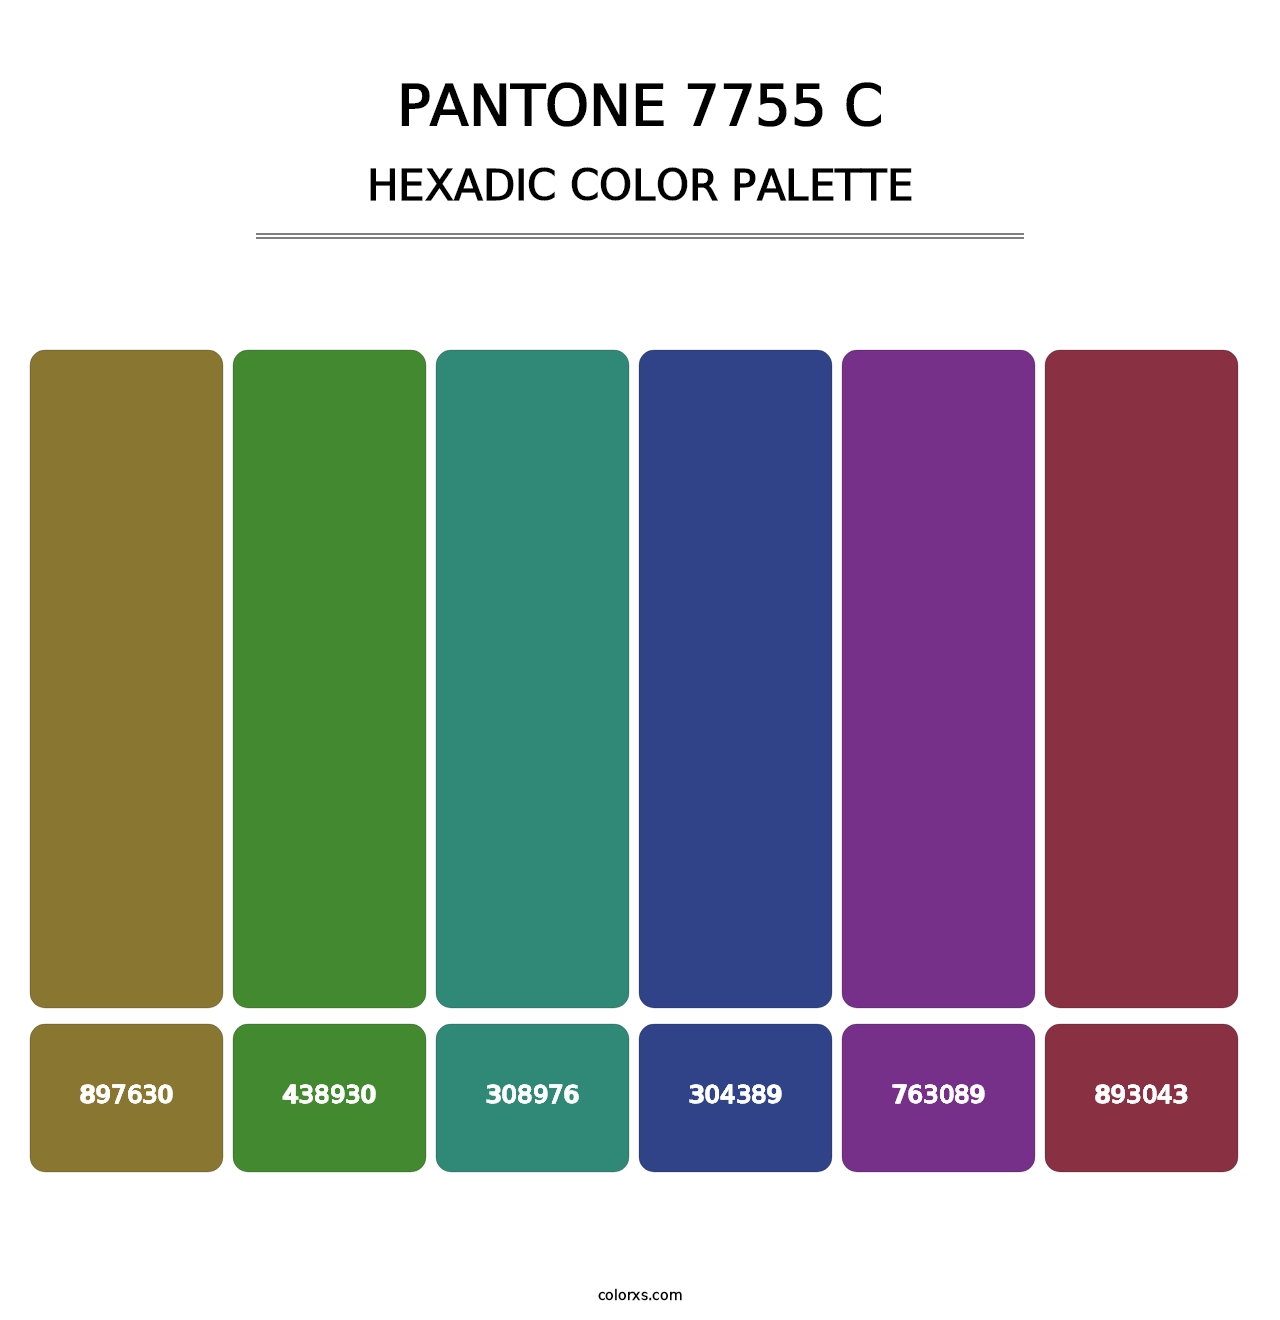 PANTONE 7755 C - Hexadic Color Palette